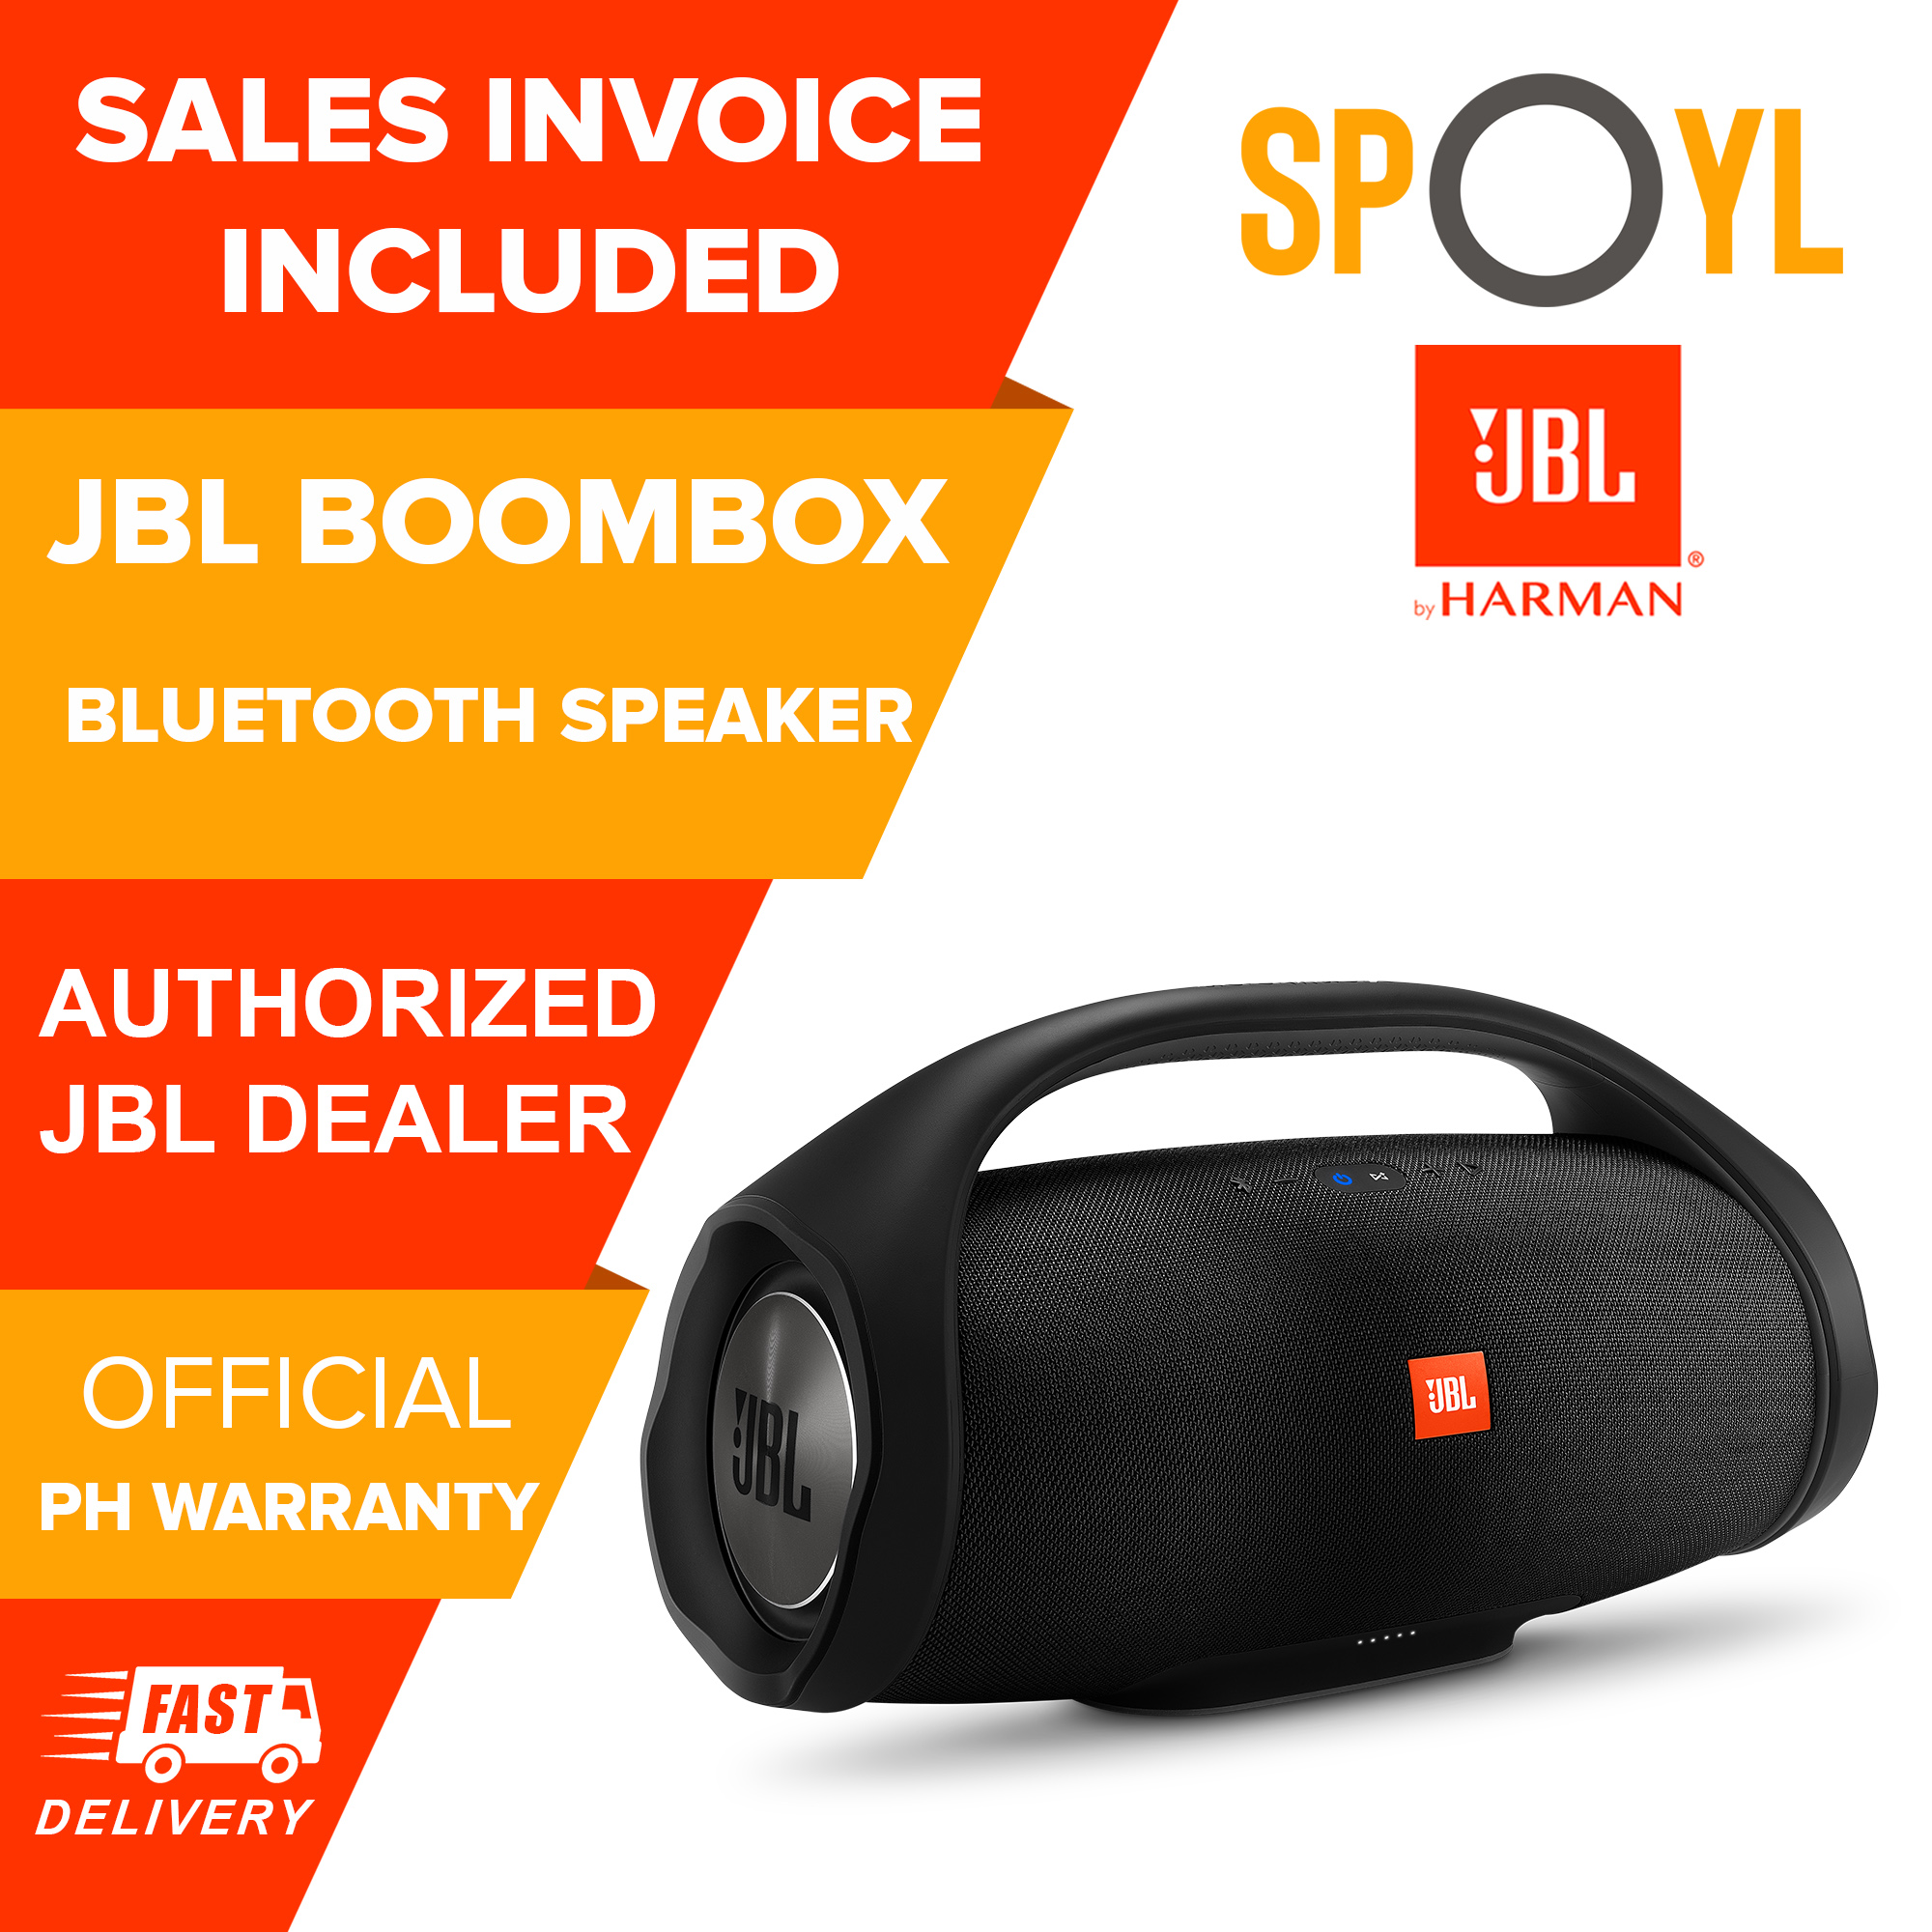 Jbl Boombox Original Wholesale Cheapest, Save 62% | jlcatj.gob.mx